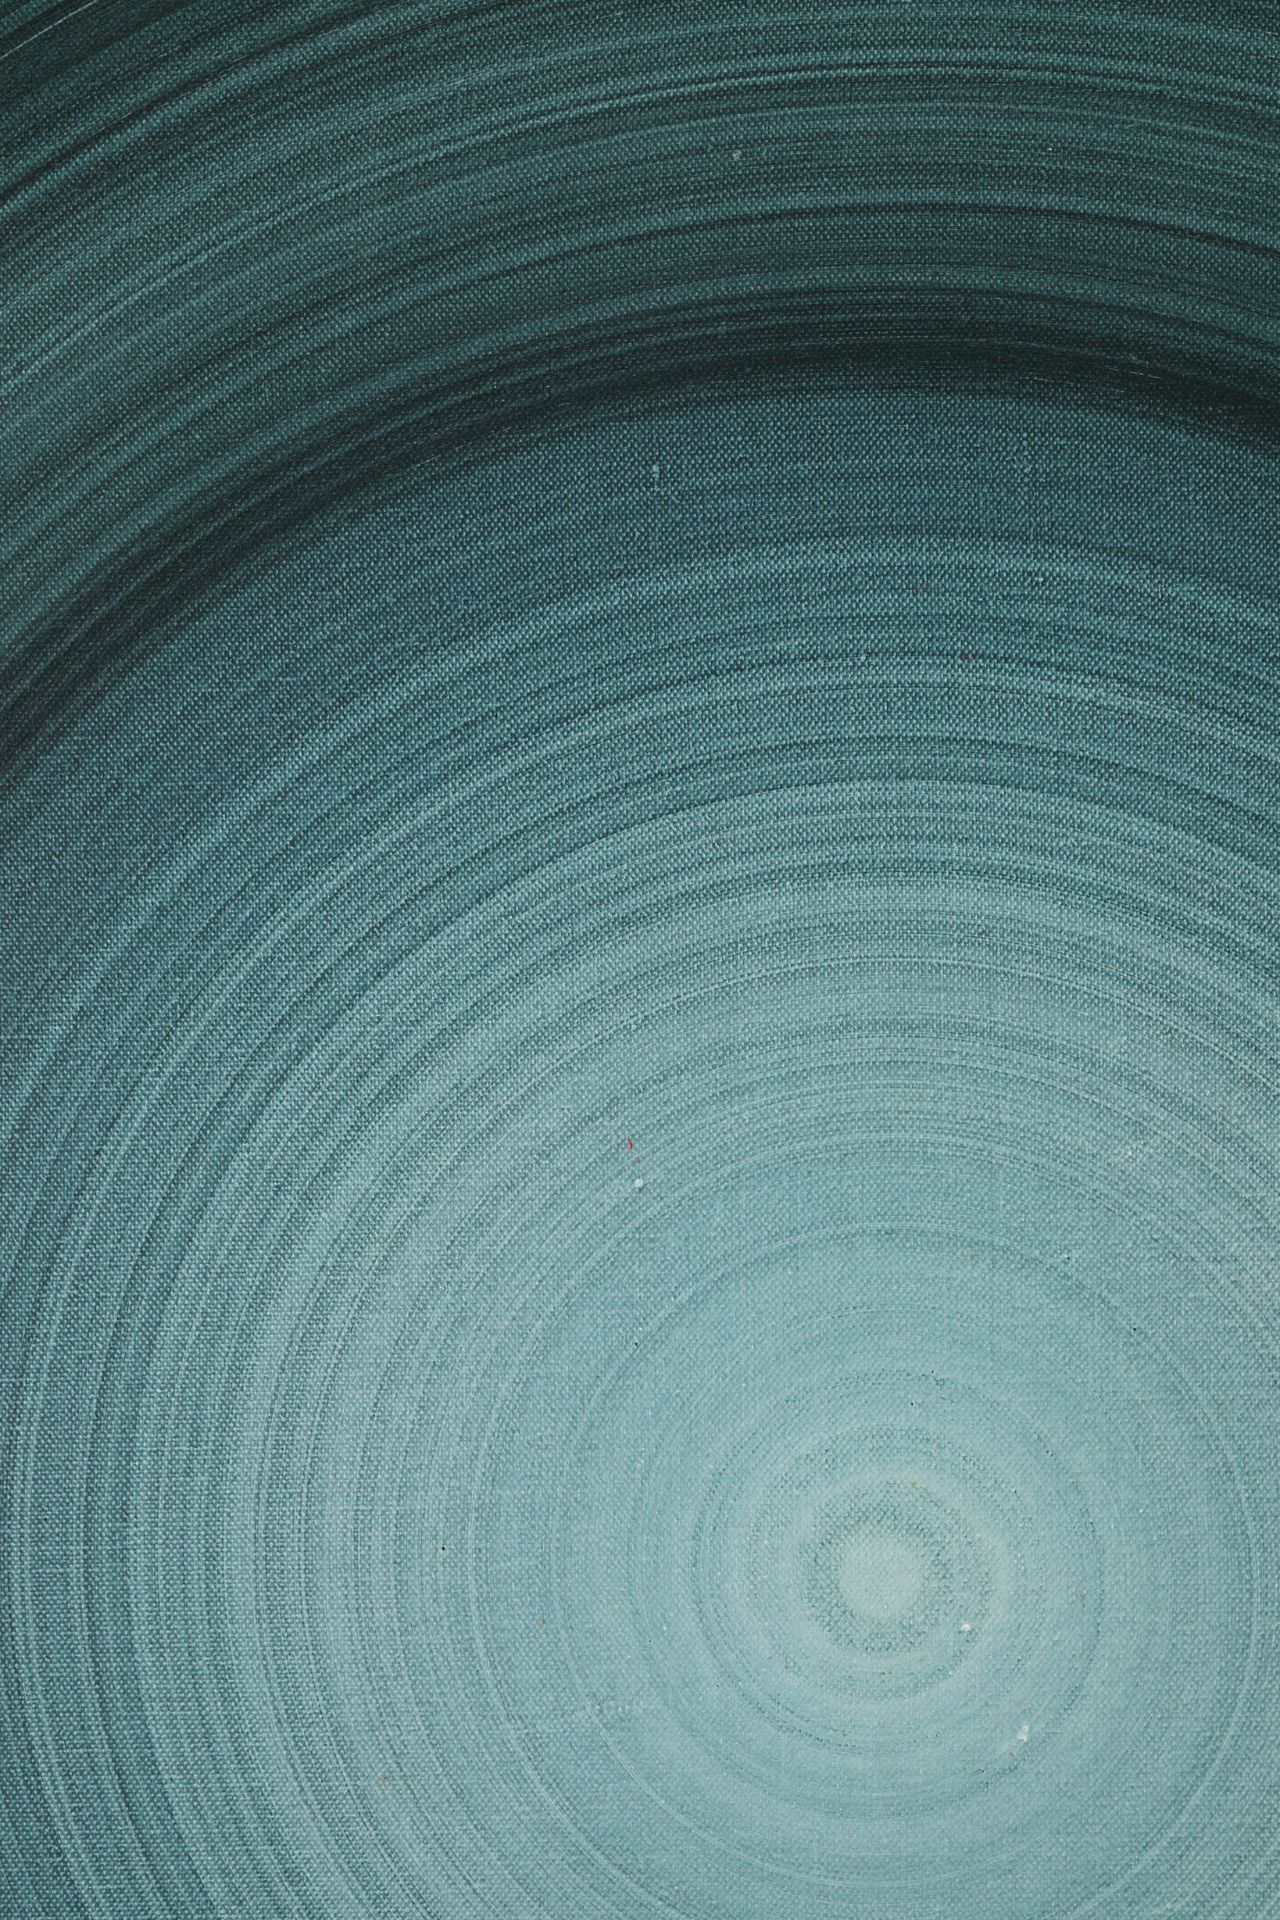 Robert Rotar*, Rotation, 1965, Große Spirale Grün, Leinwand, 80 x 80 cm - Bild 3 aus 5